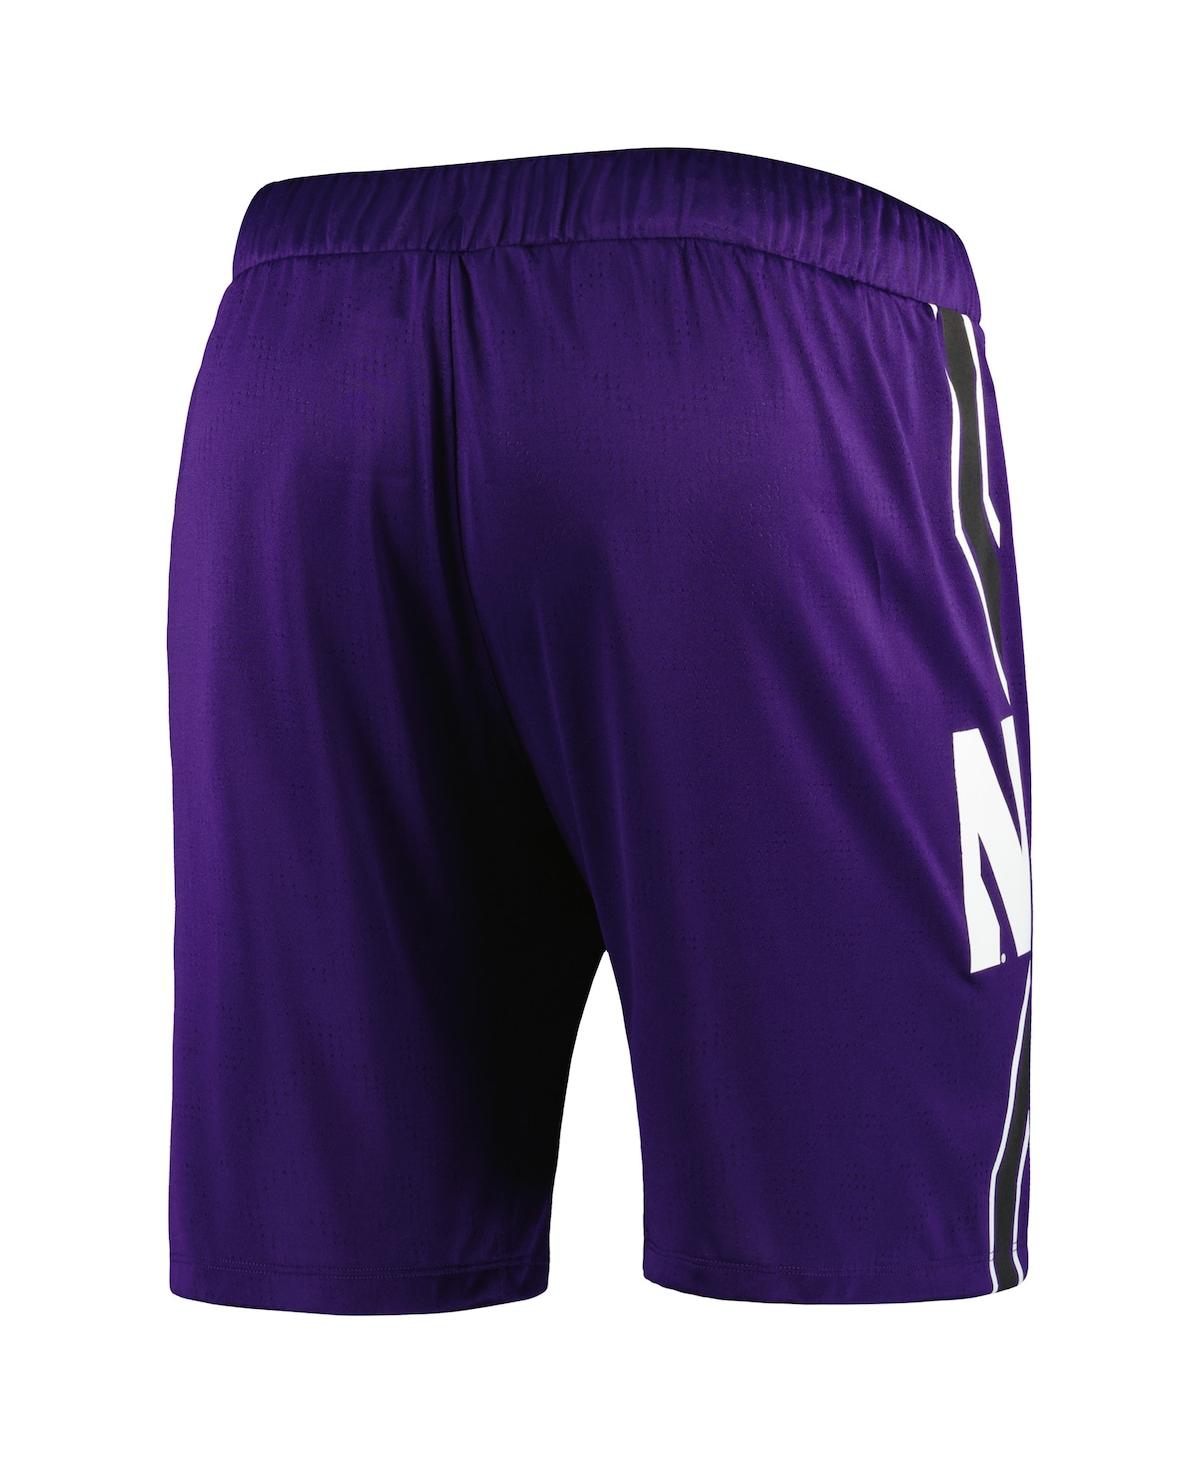 Shop Under Armour Men's  Purple Northwestern Wildcats Logo Replica Basketball Shorts